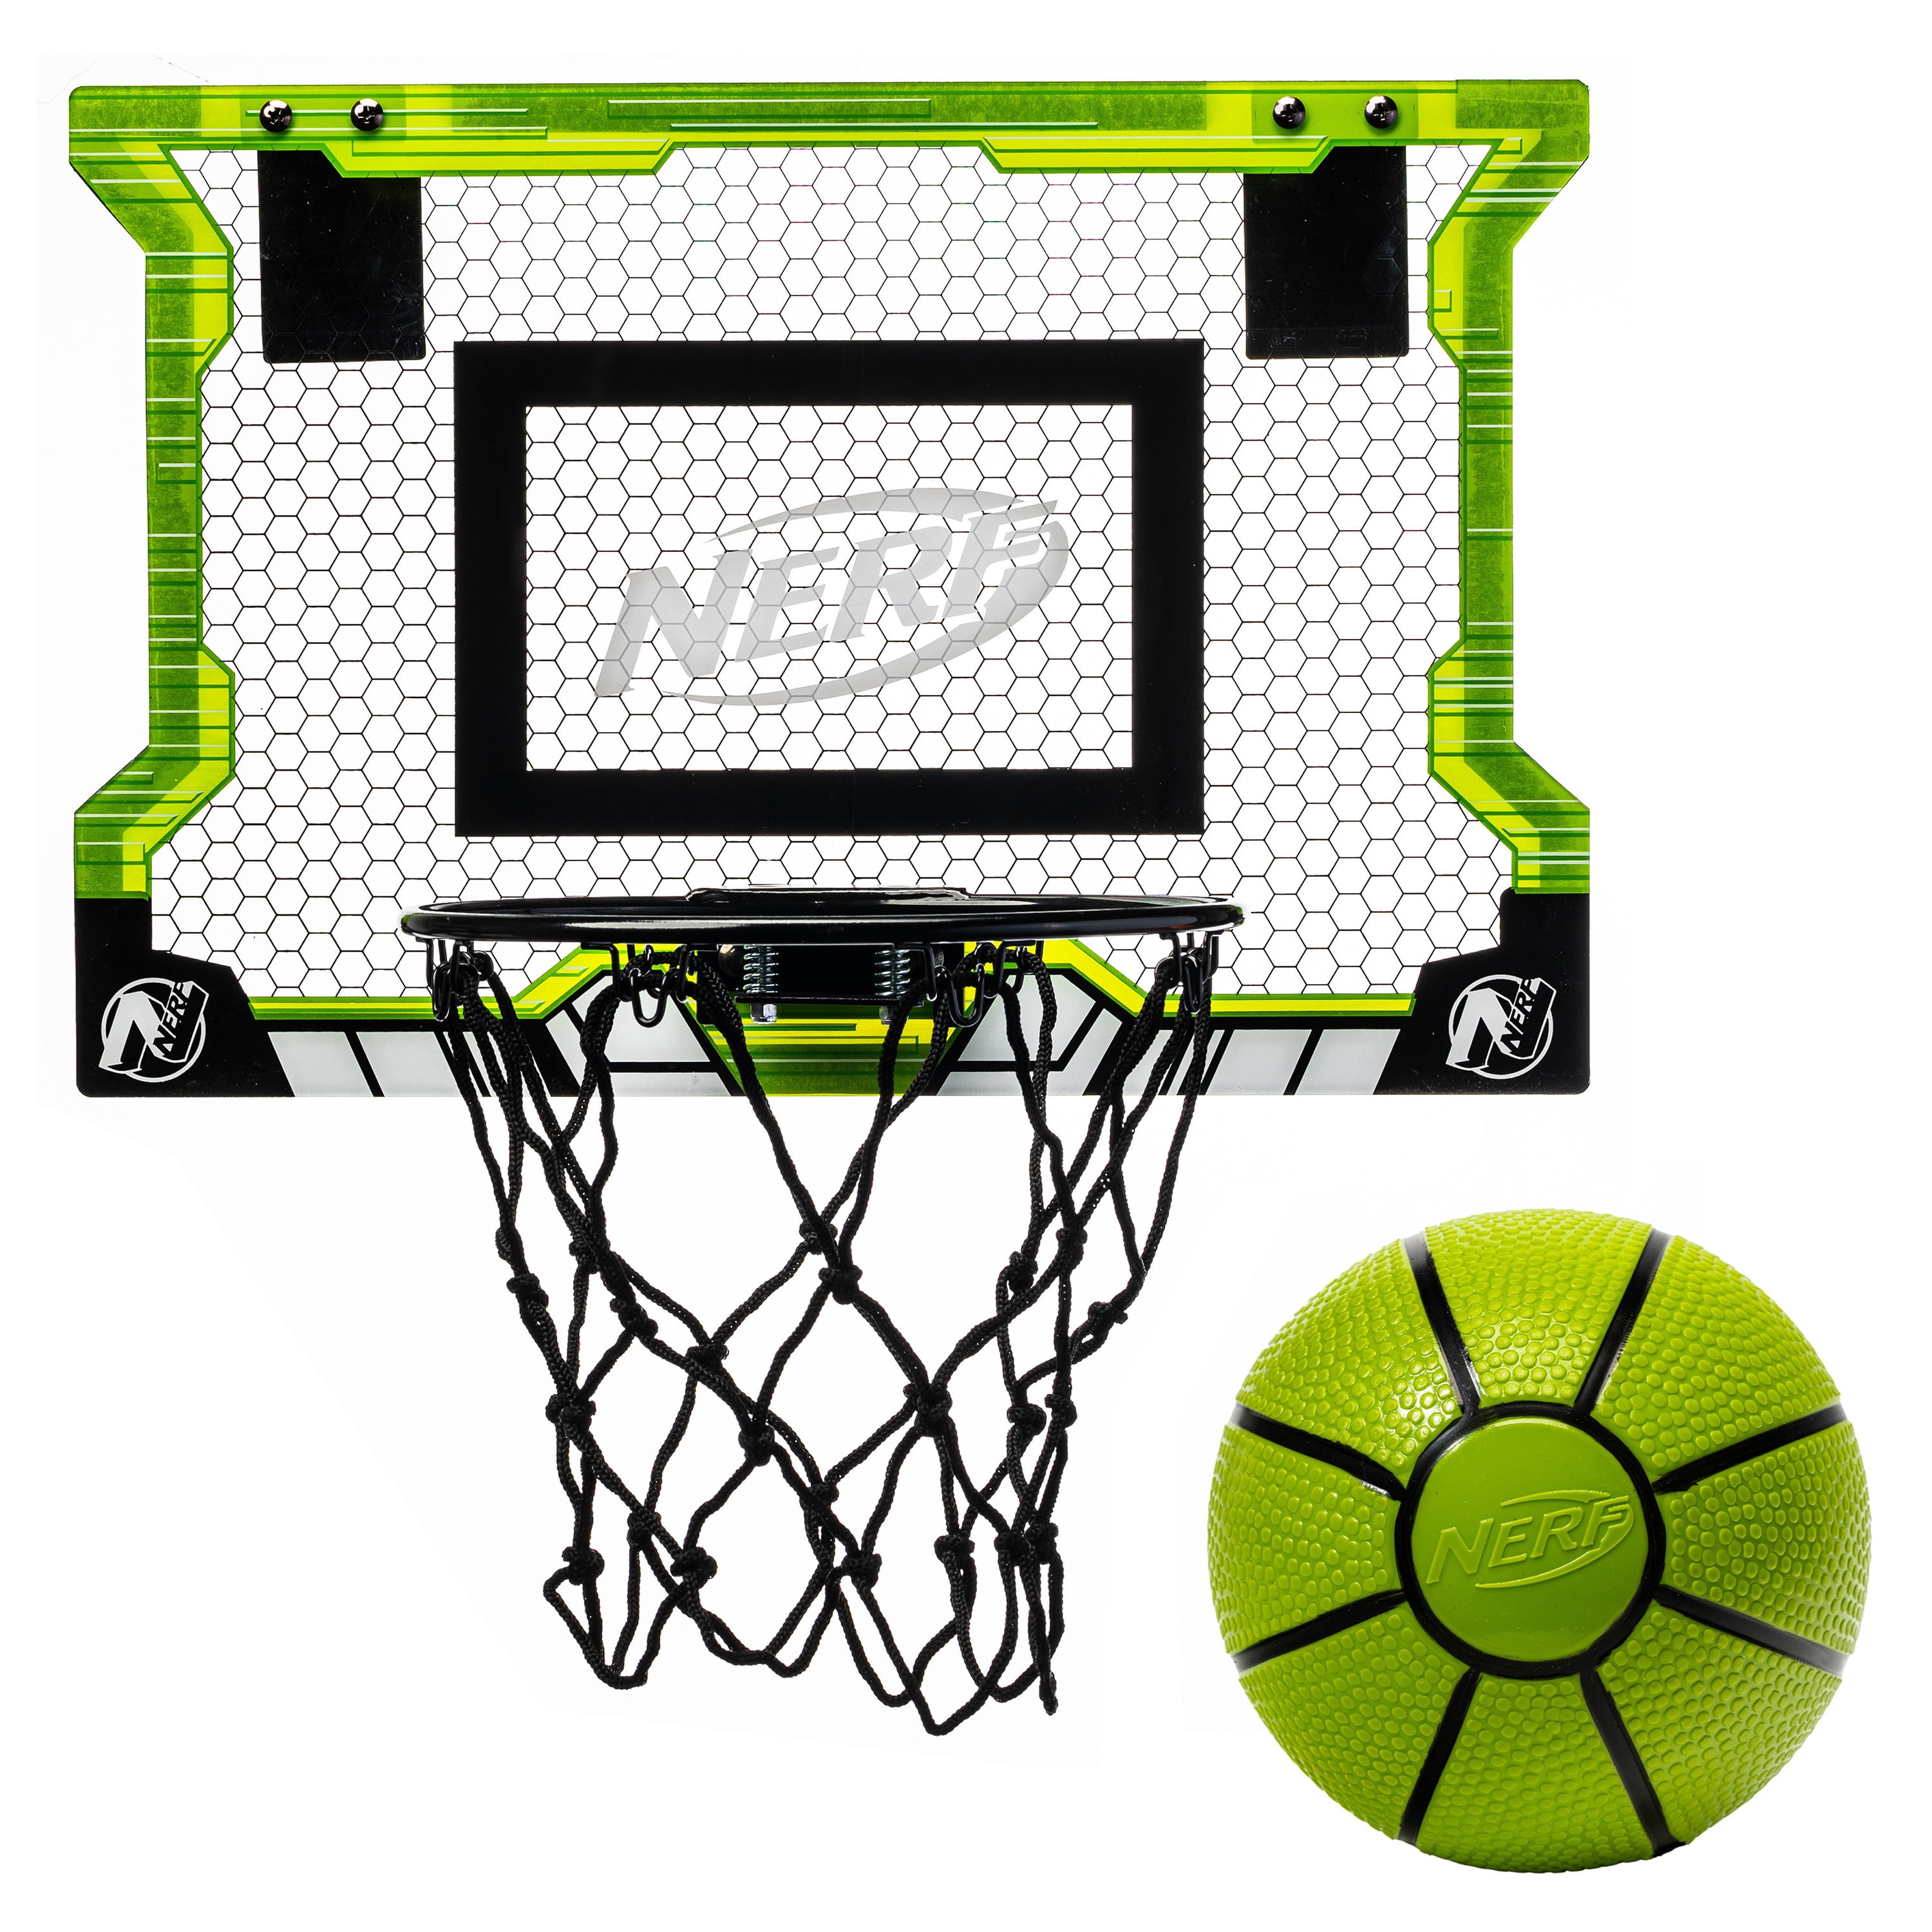 Franklin Sports Pro Hoops Basketball : Target